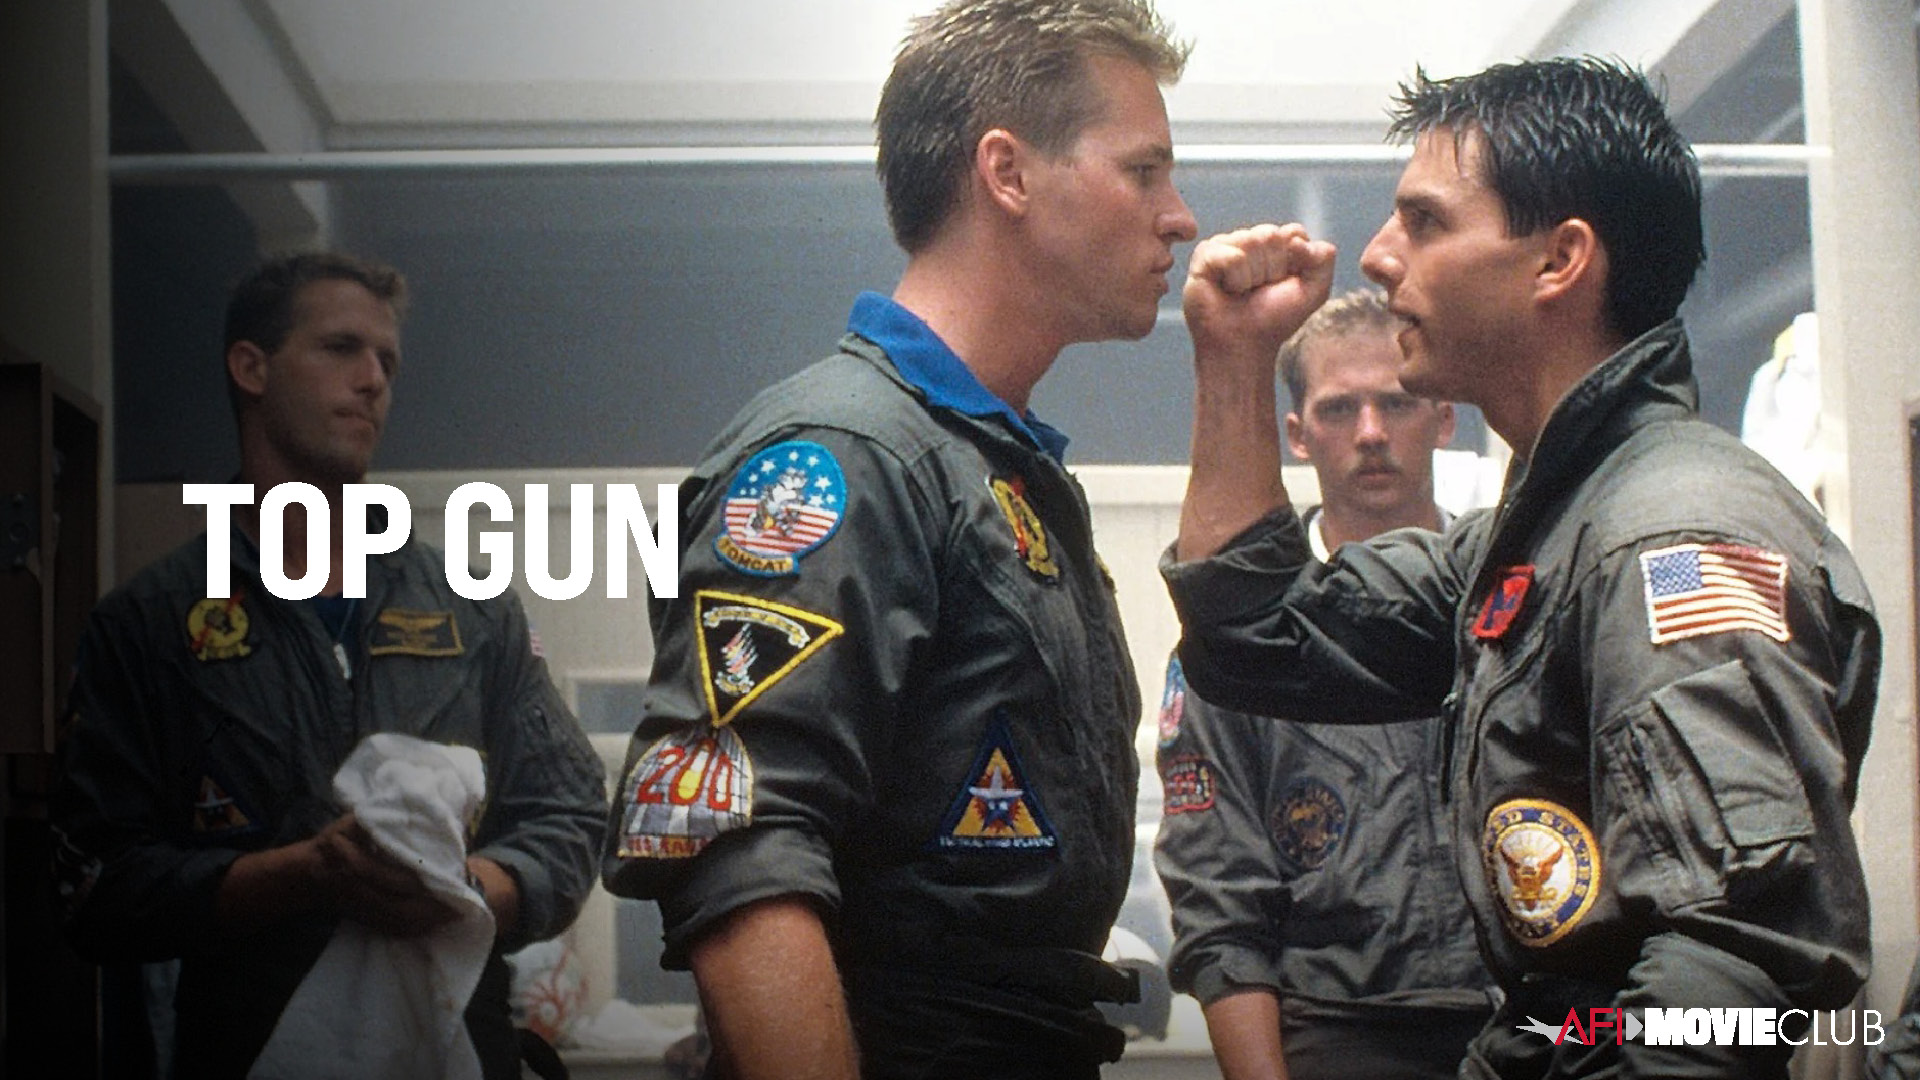 Top Gun Film Still - Tom Cruise and Val Kilmer